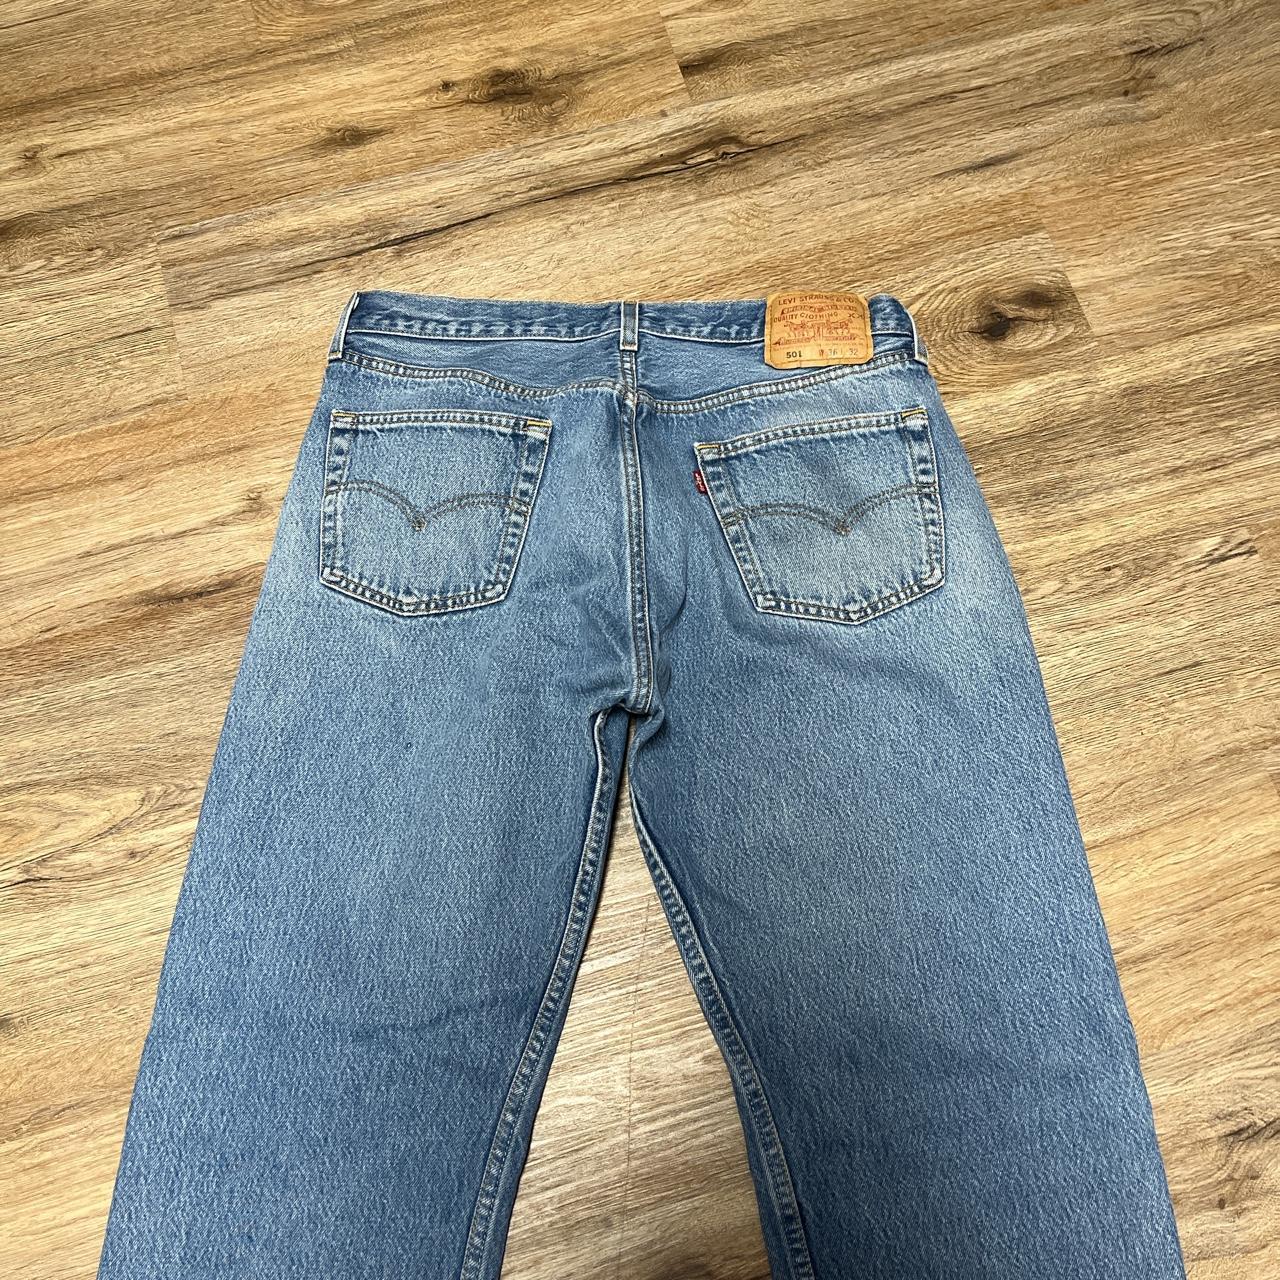 Vintage 1990’s Levi’s 501 jeans size 36x32 in... - Depop